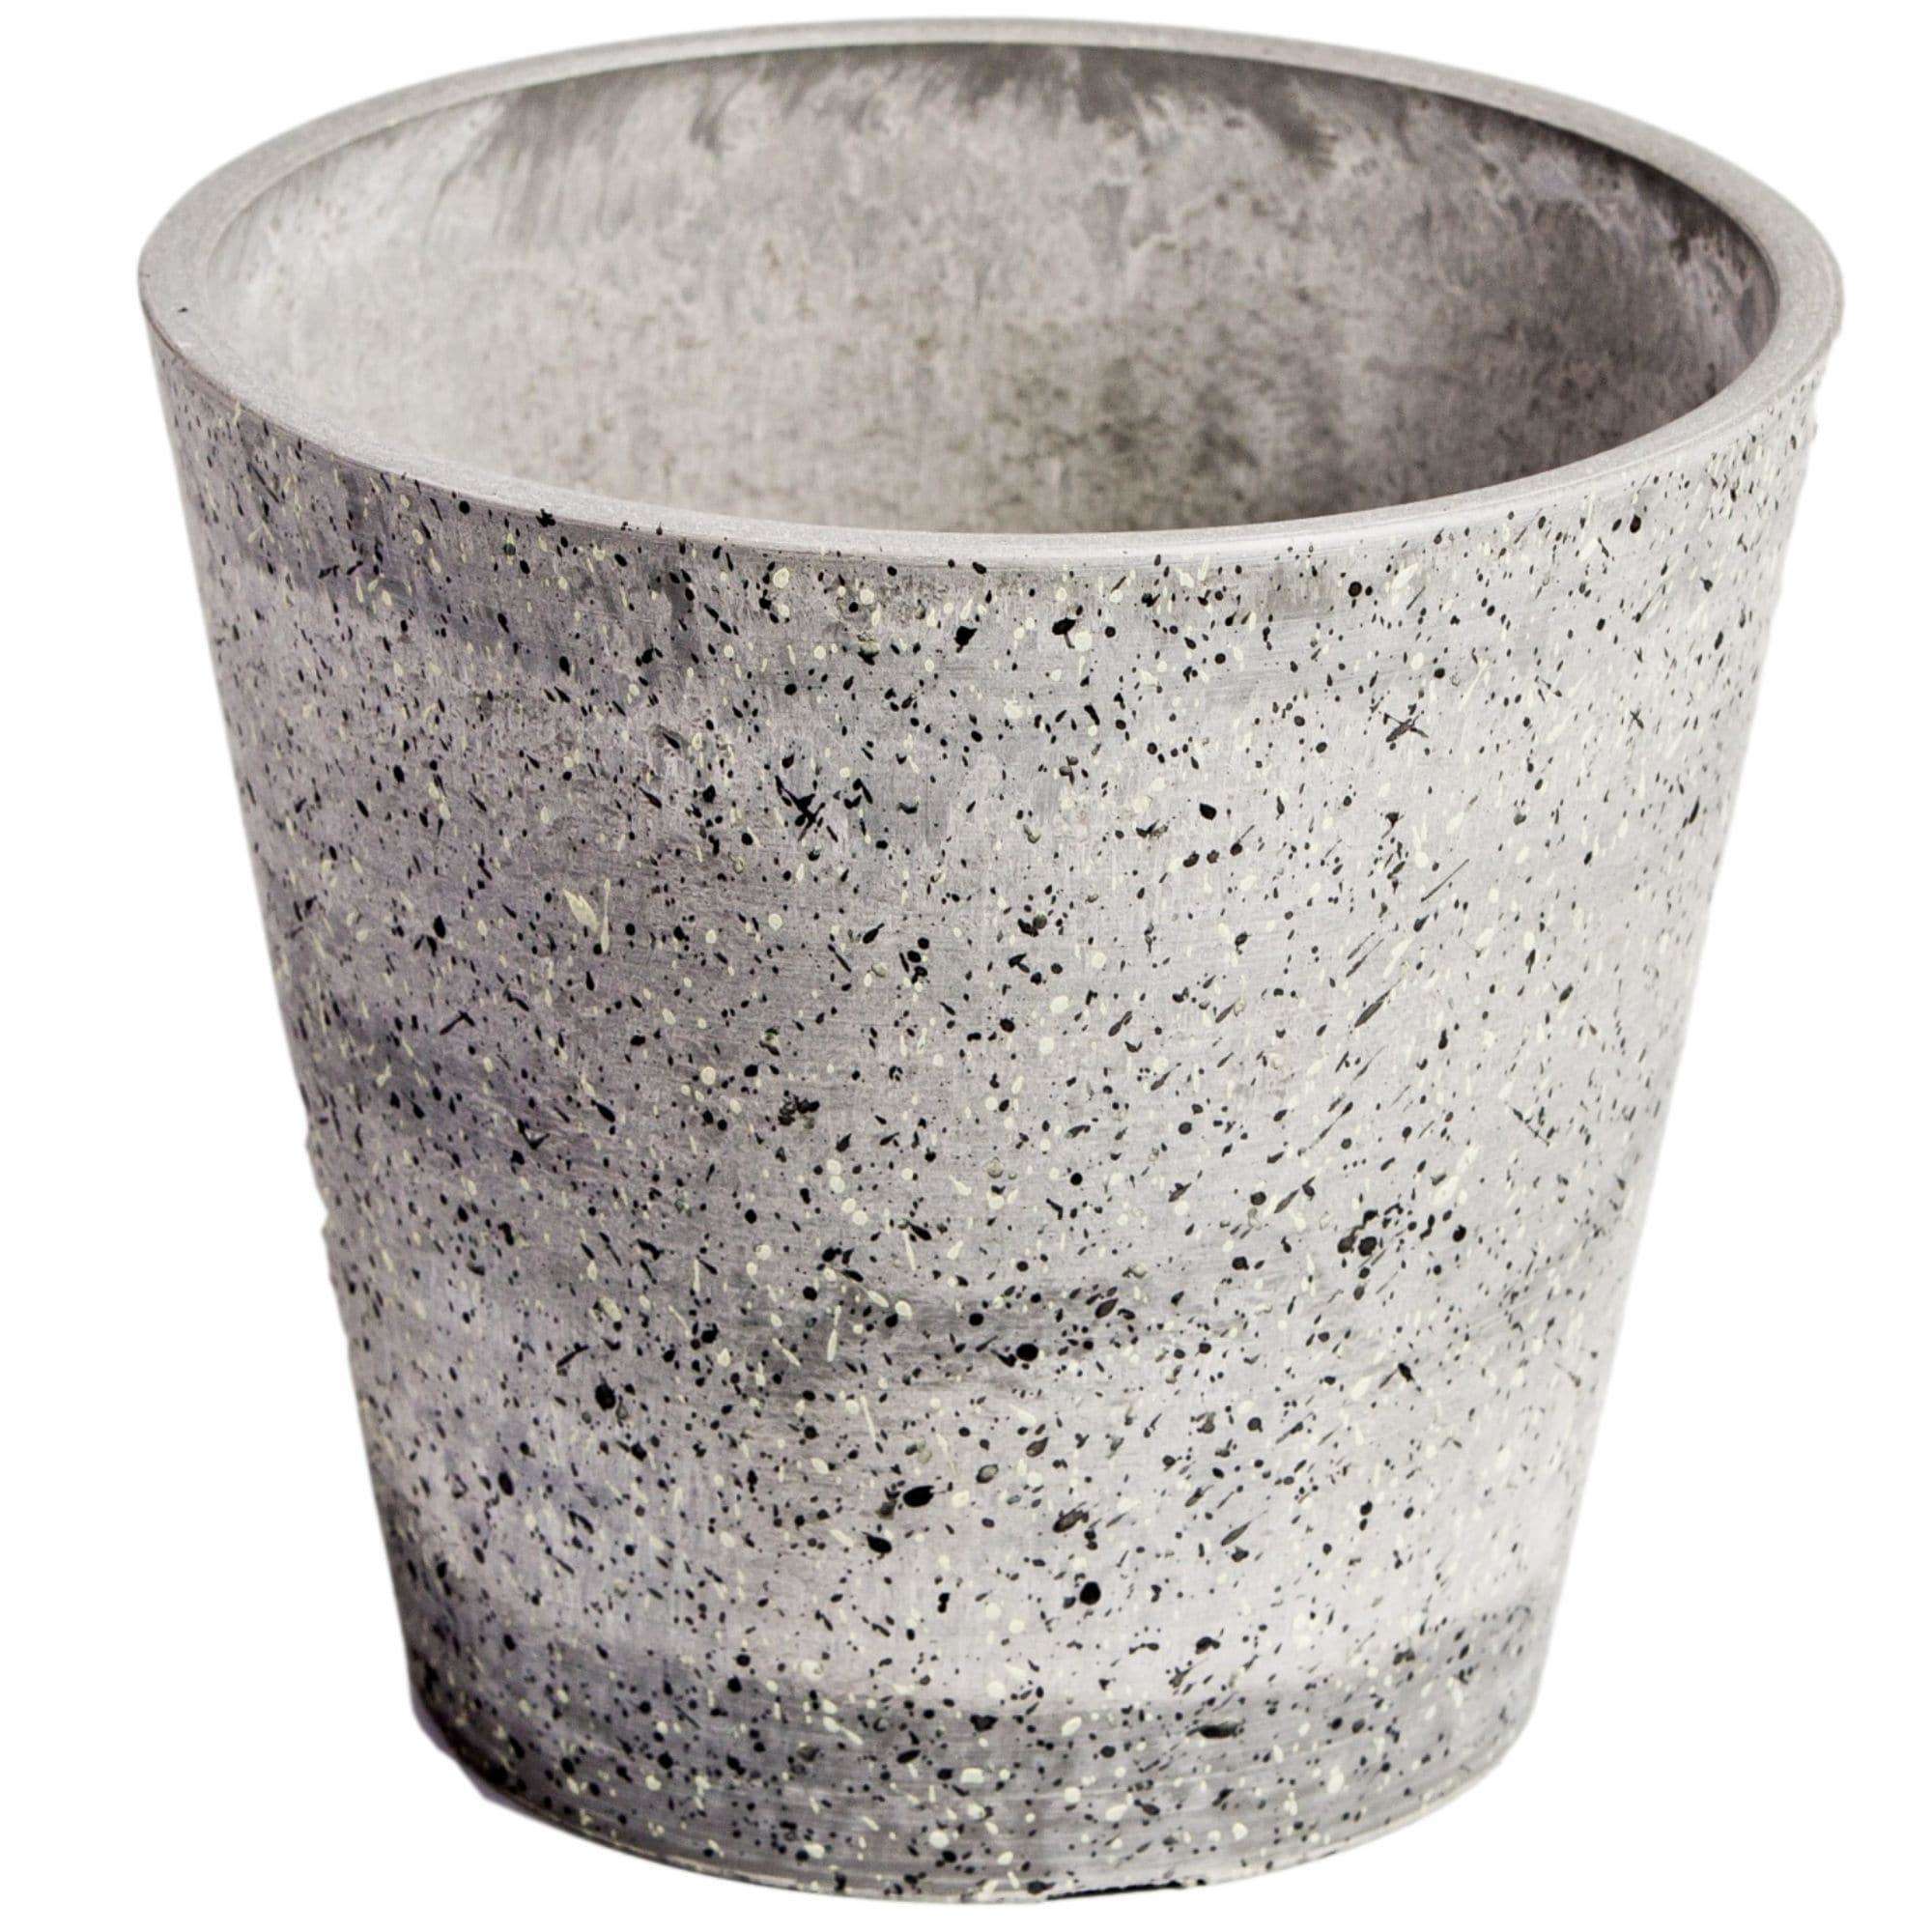 imitation-grey-stone-pot-20cm-968158.jpg